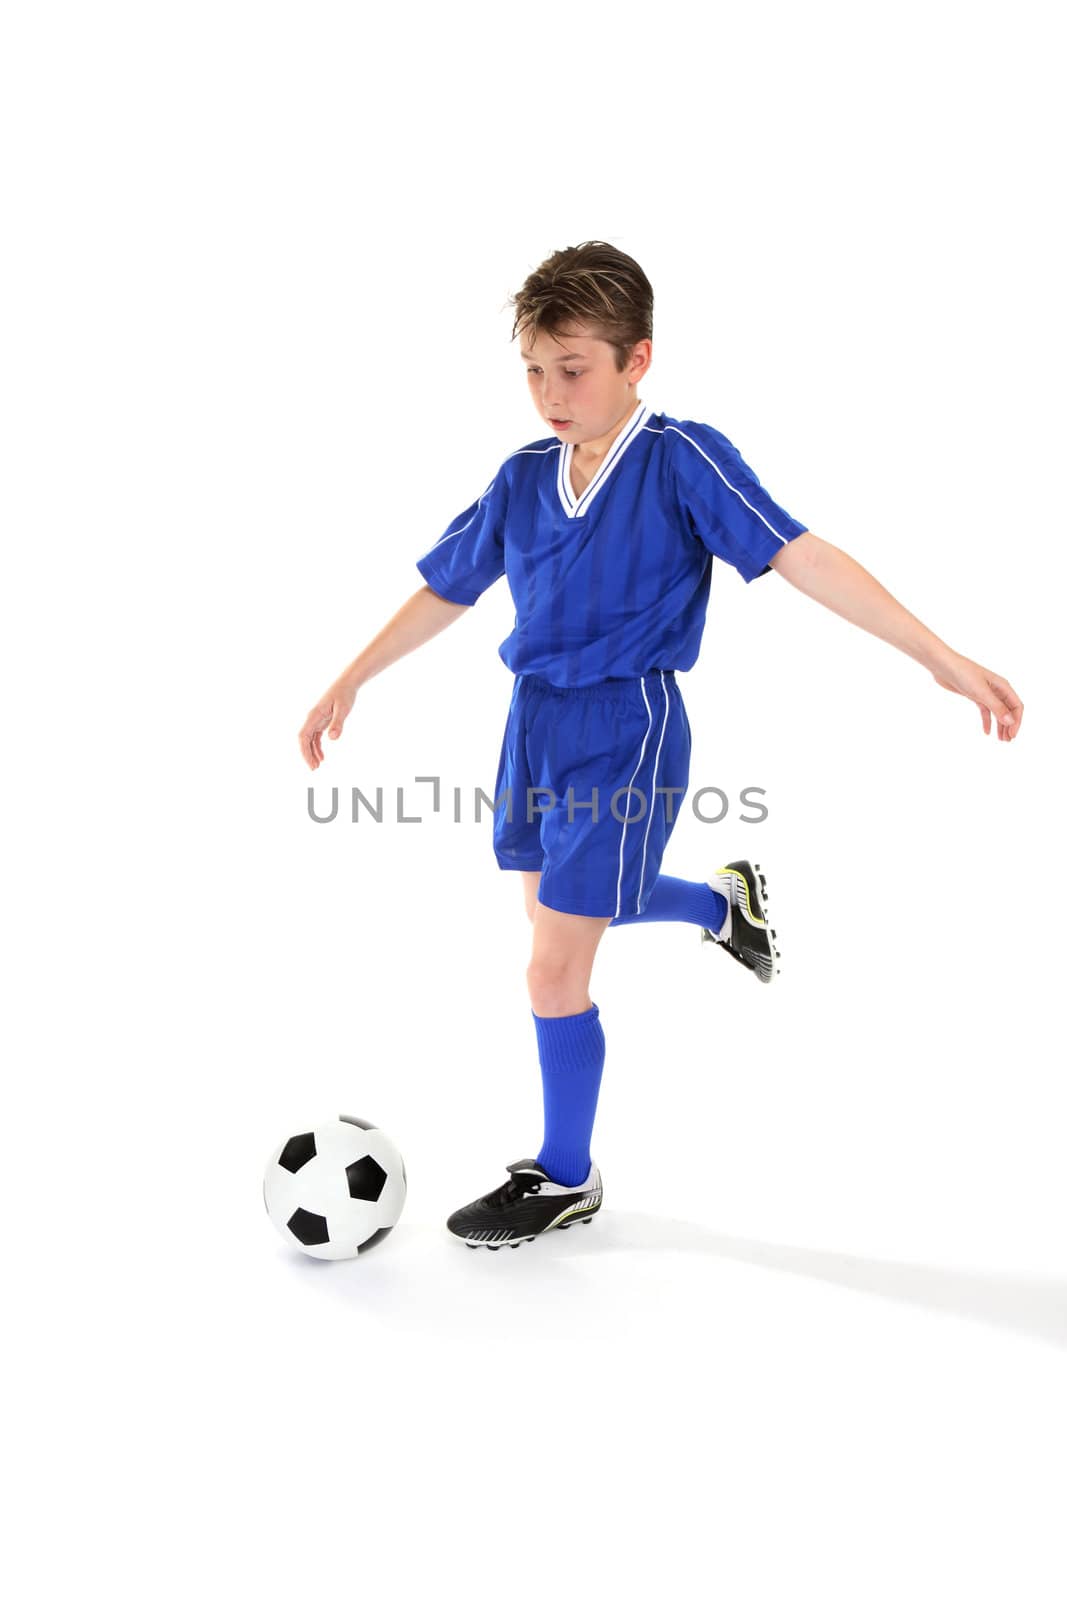 A boy kicks a soccer ball. Some slight motion